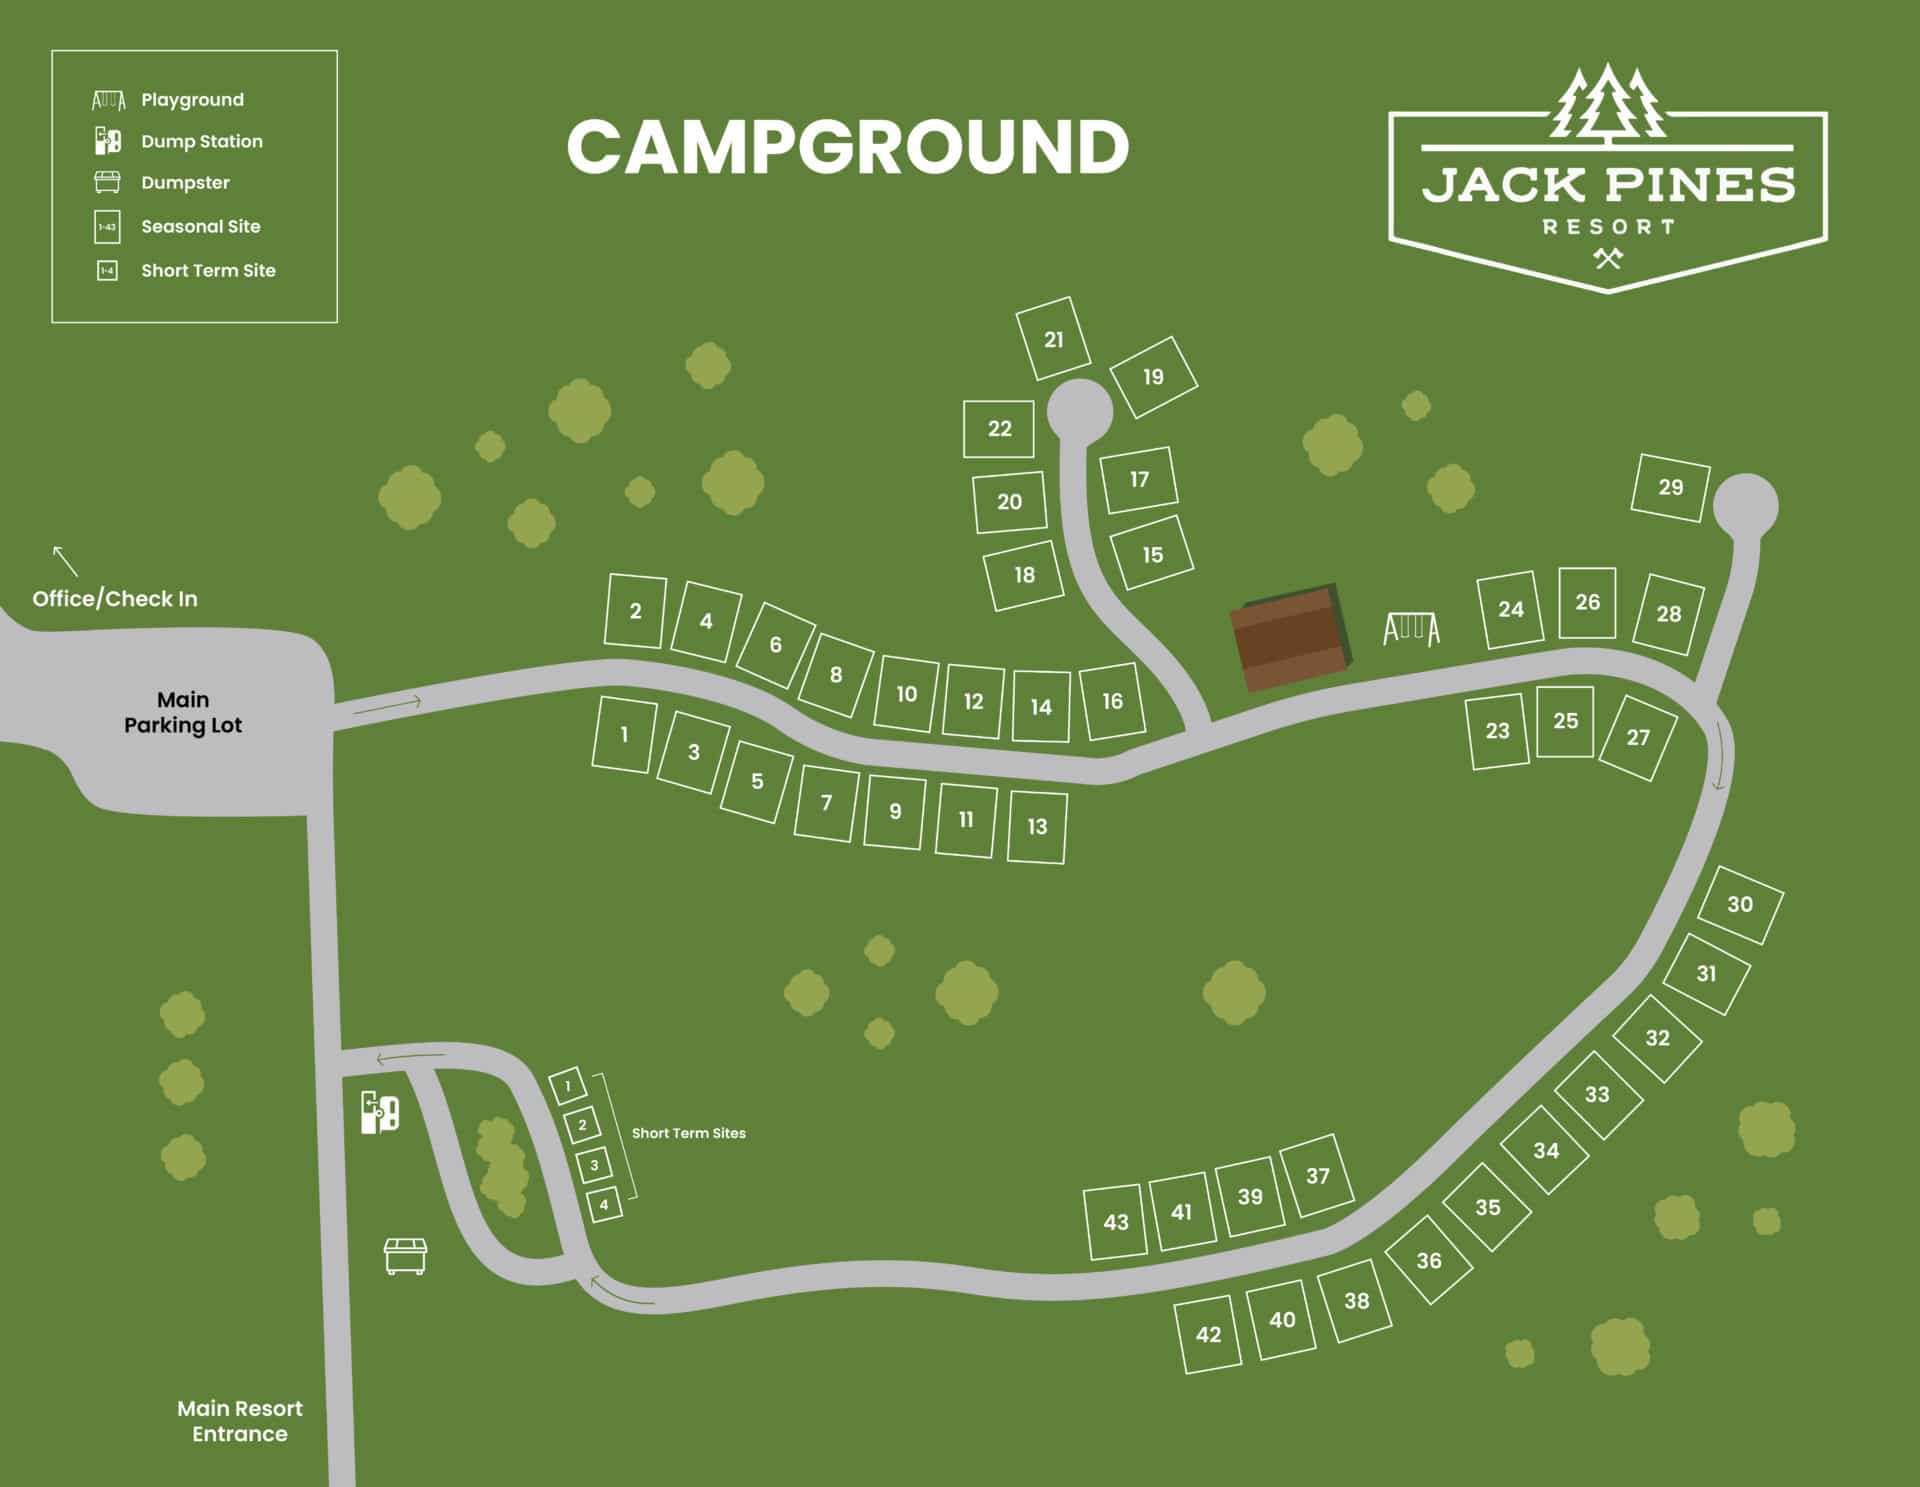 Jack Pines Resort Campground Map